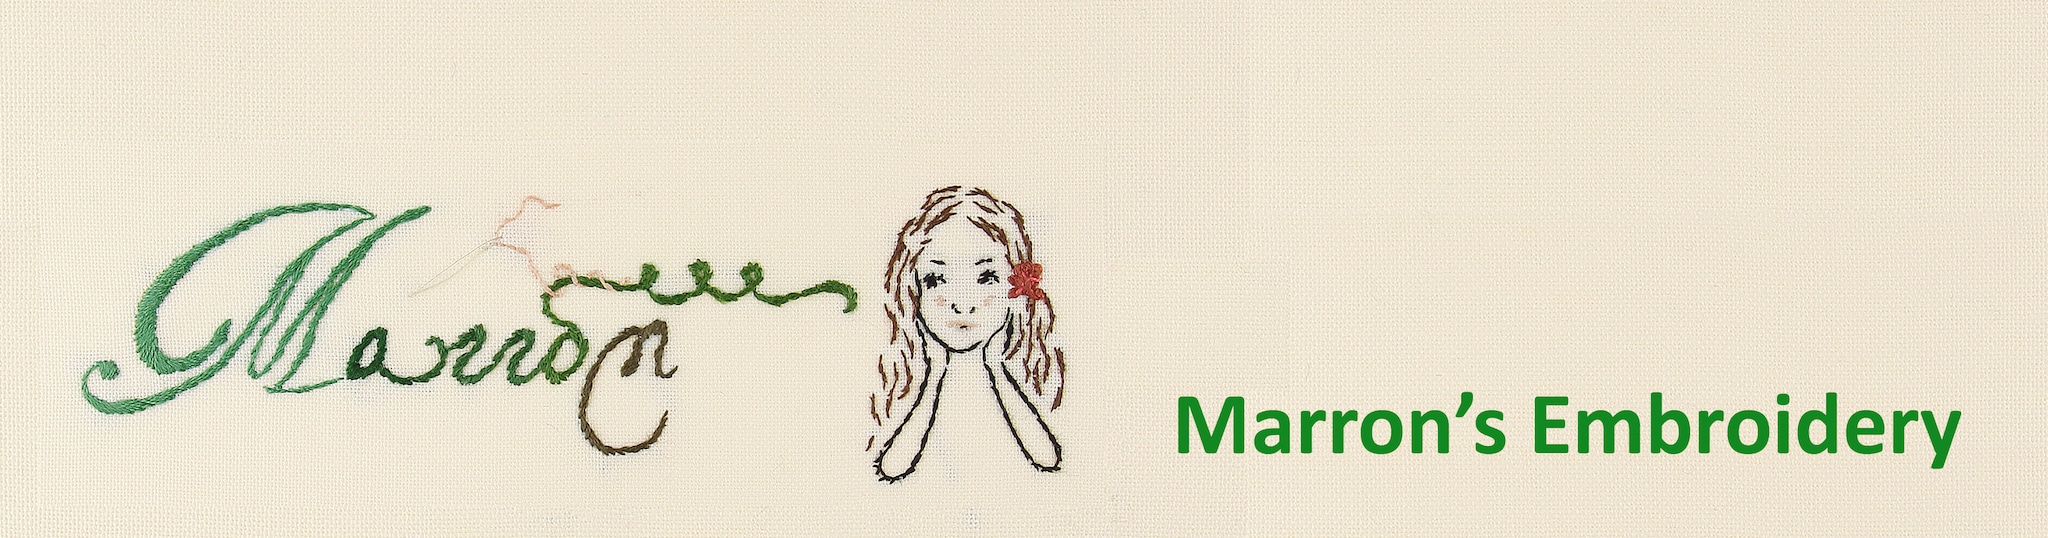 marron's embroidery